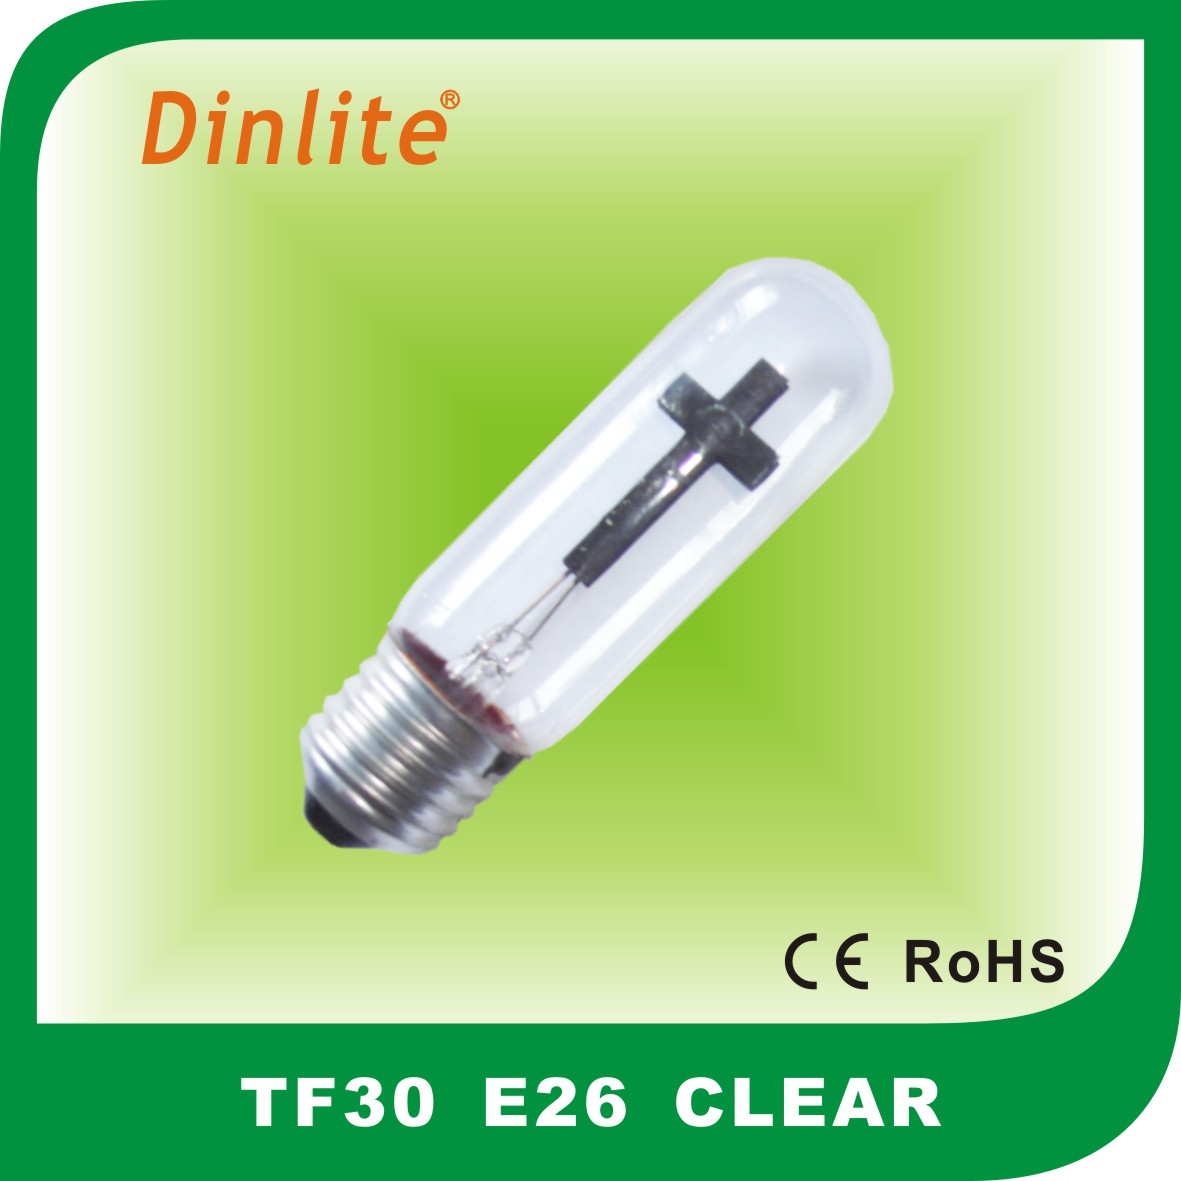 TF30 E26 Flame Tube Lamps Incandescent Bulbs For Decorative Purpose